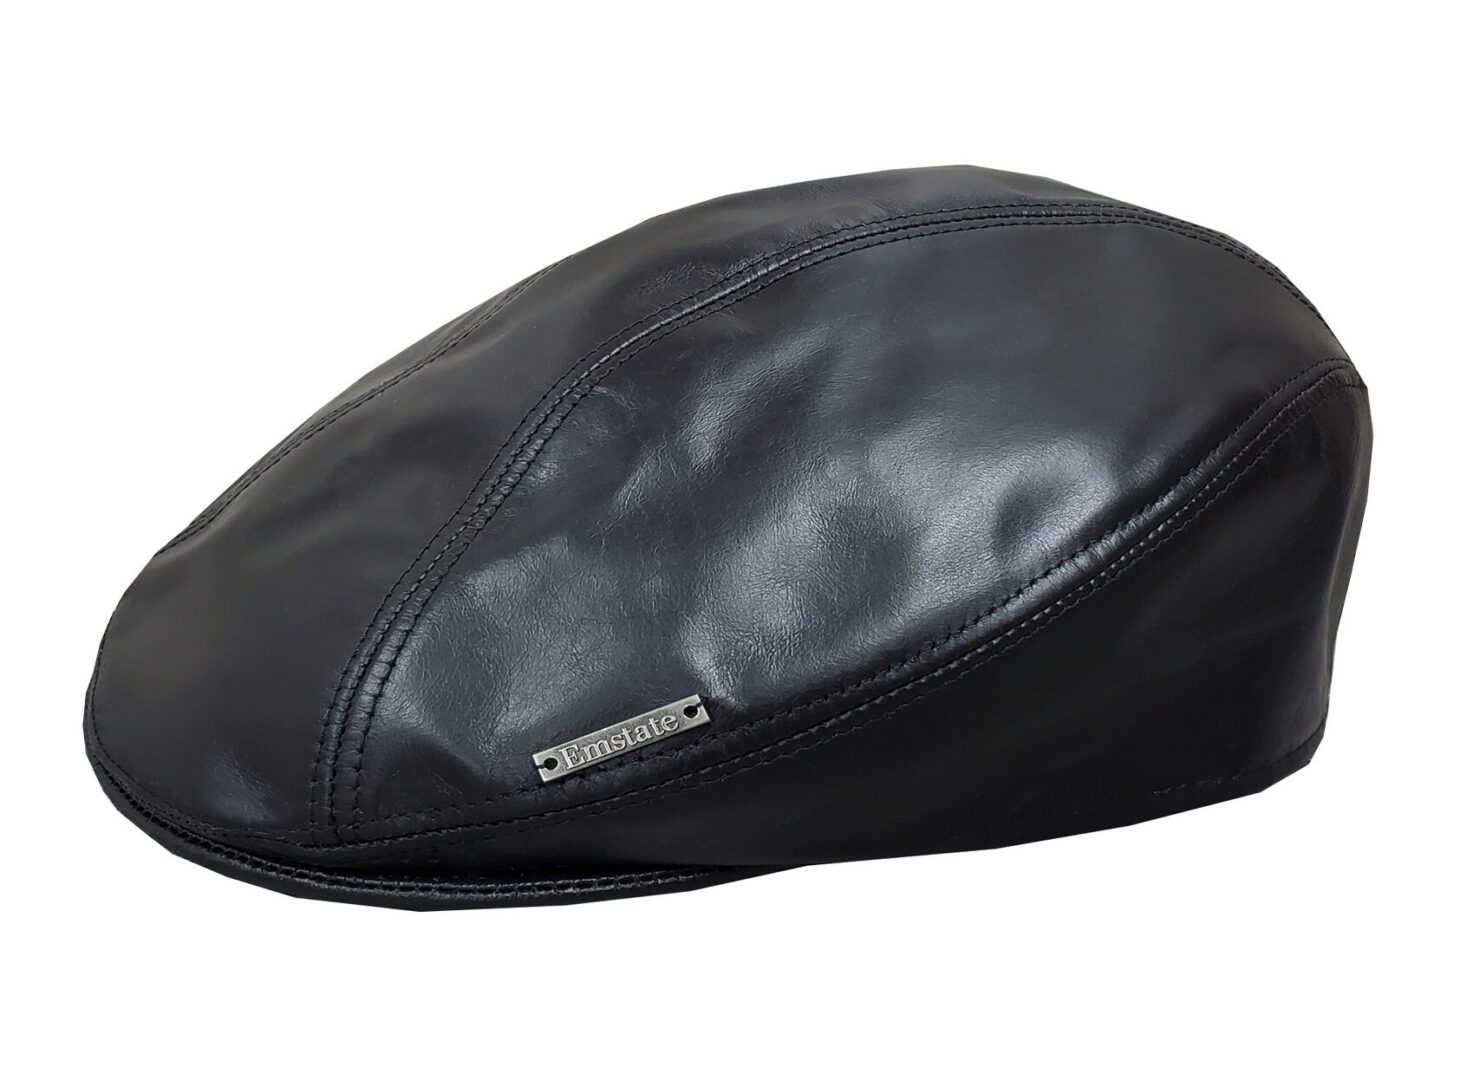 afschaffen leveren schaamte Black Vintage Leather Ascot Ivy Driver Cap - Winner Caps MFG. Company